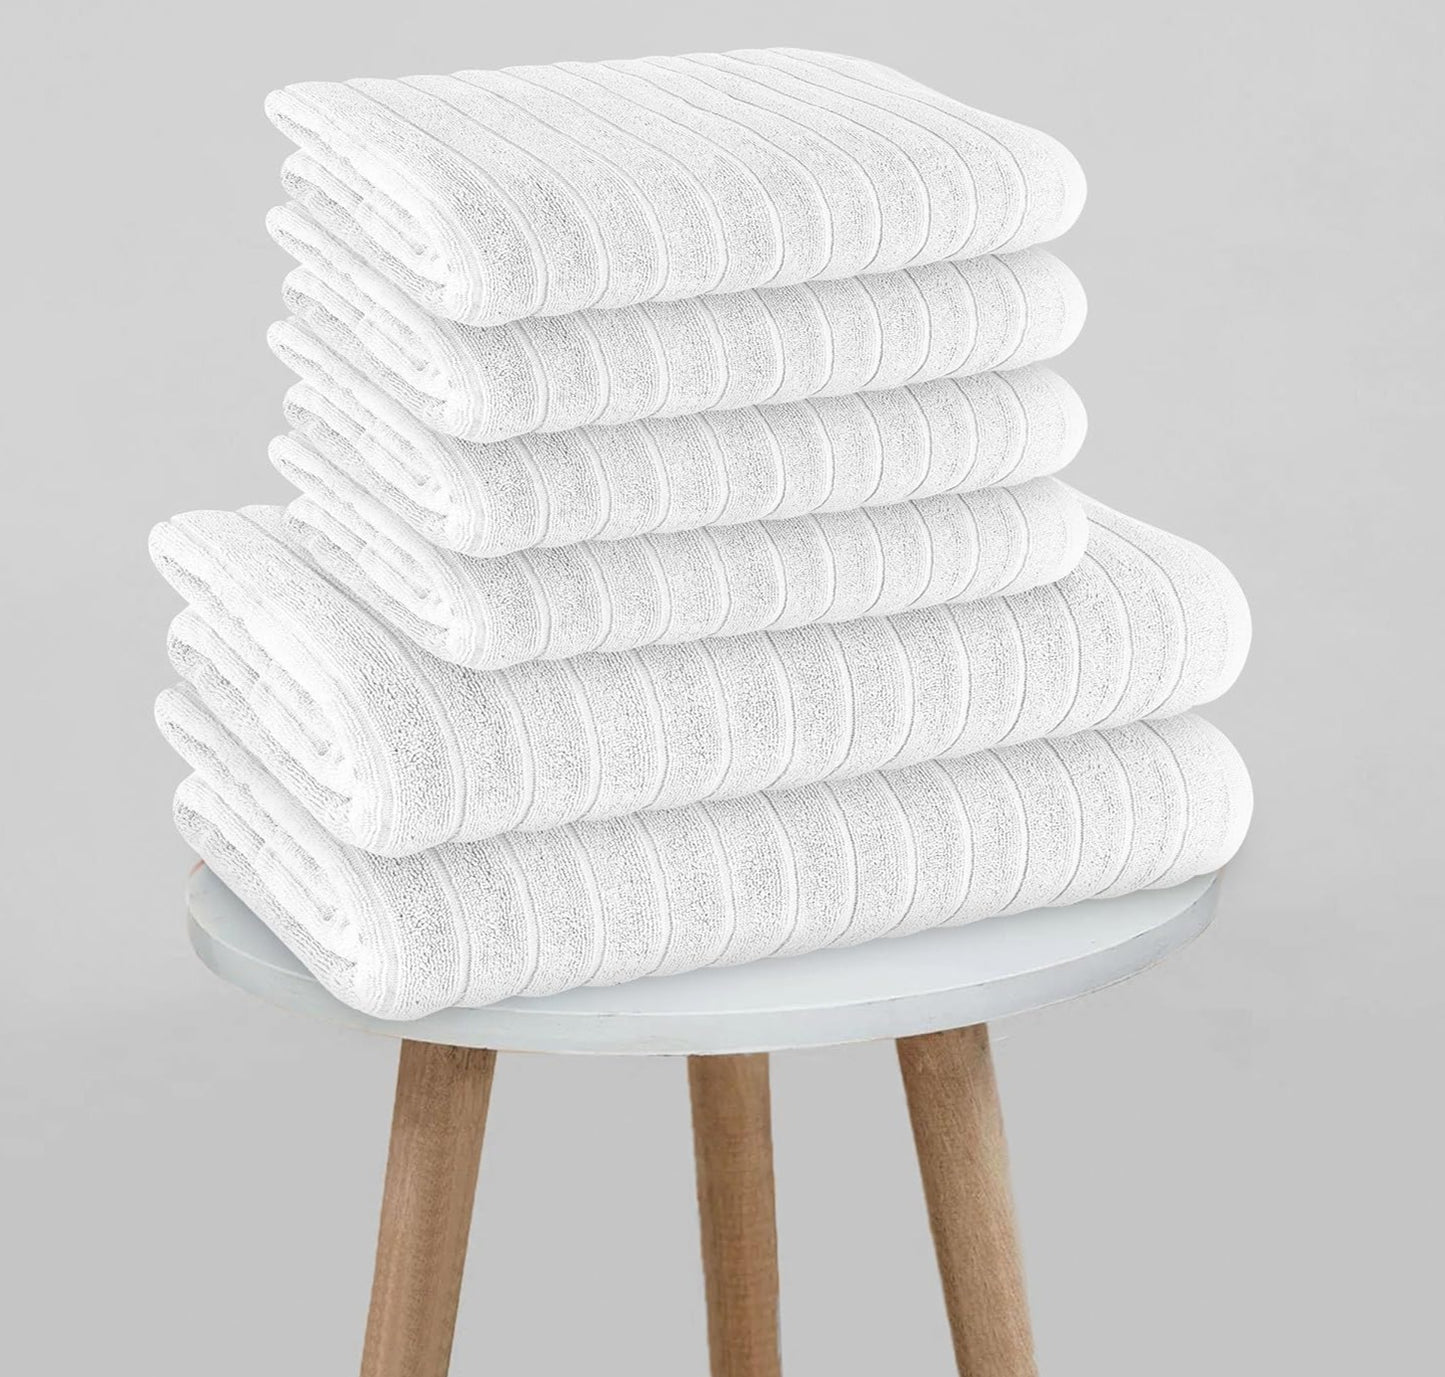 Lavish Home Ribbed Cotton 10 Piece Towel Set - White